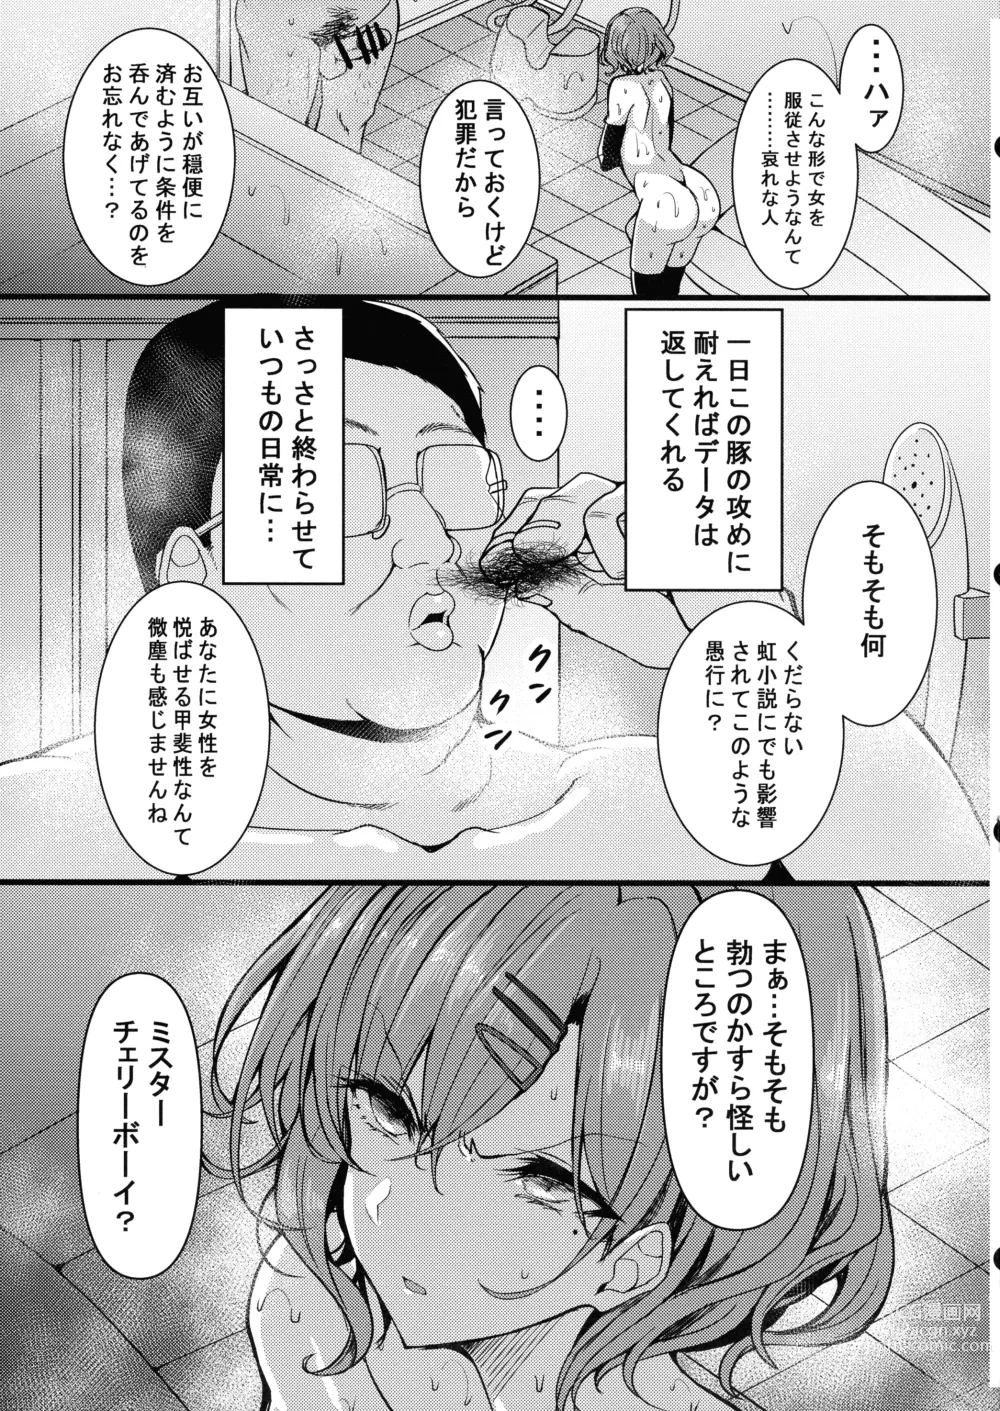 Page 7 of doujinshi HTSK15